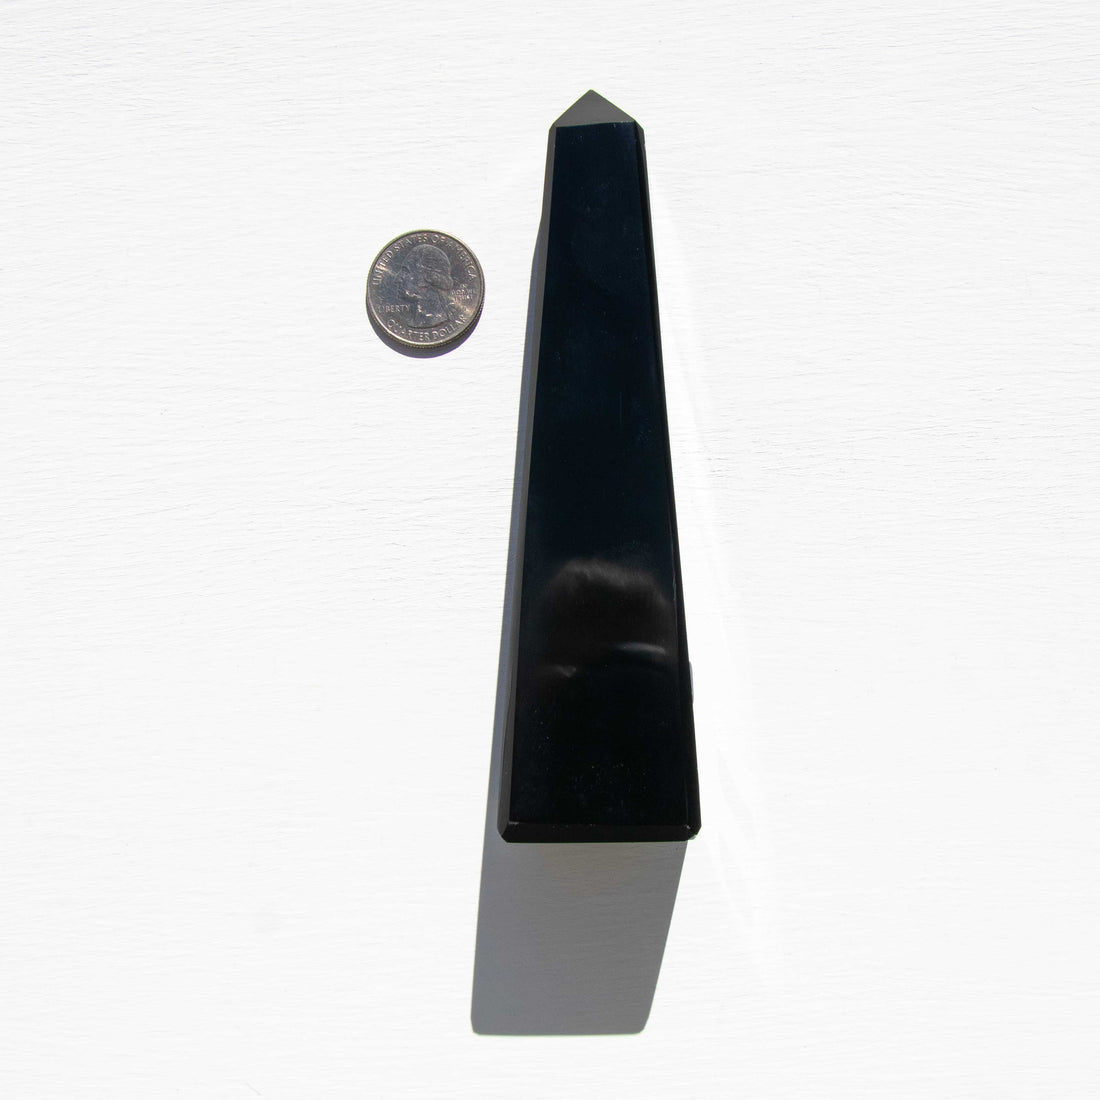 Obsidian, Black - Obelisk